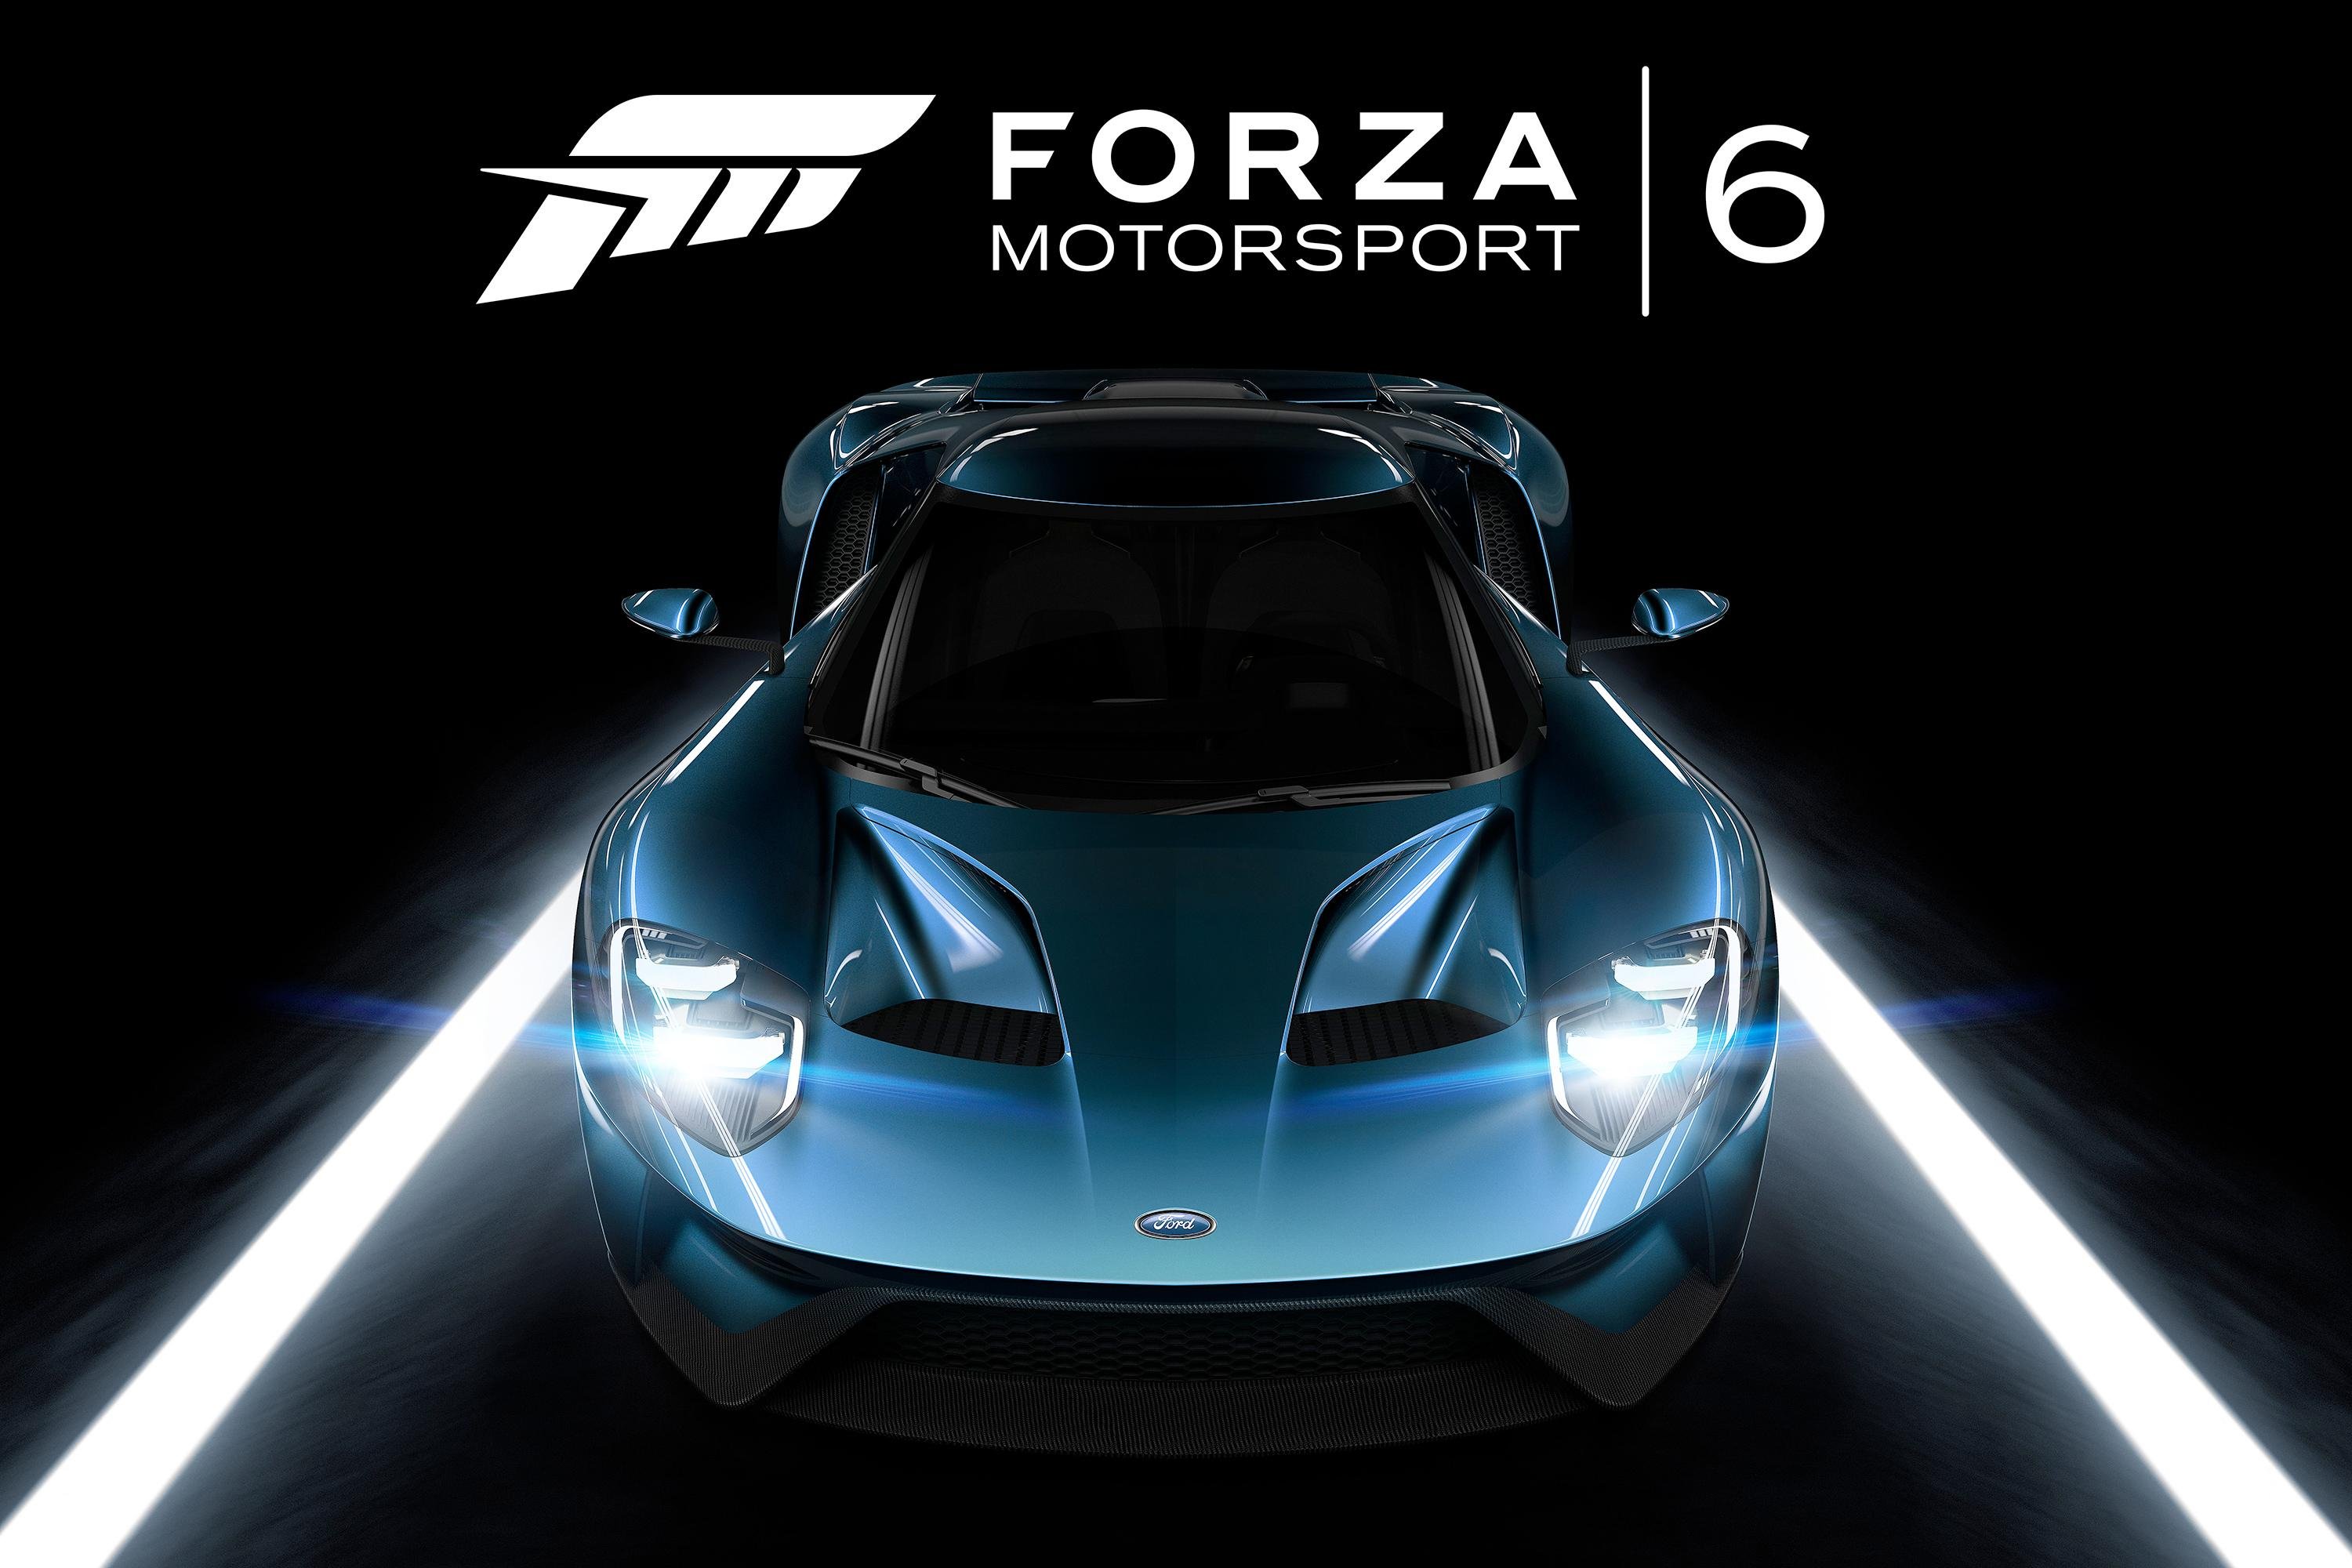 Forza motorsport 6 pc download torrent full version